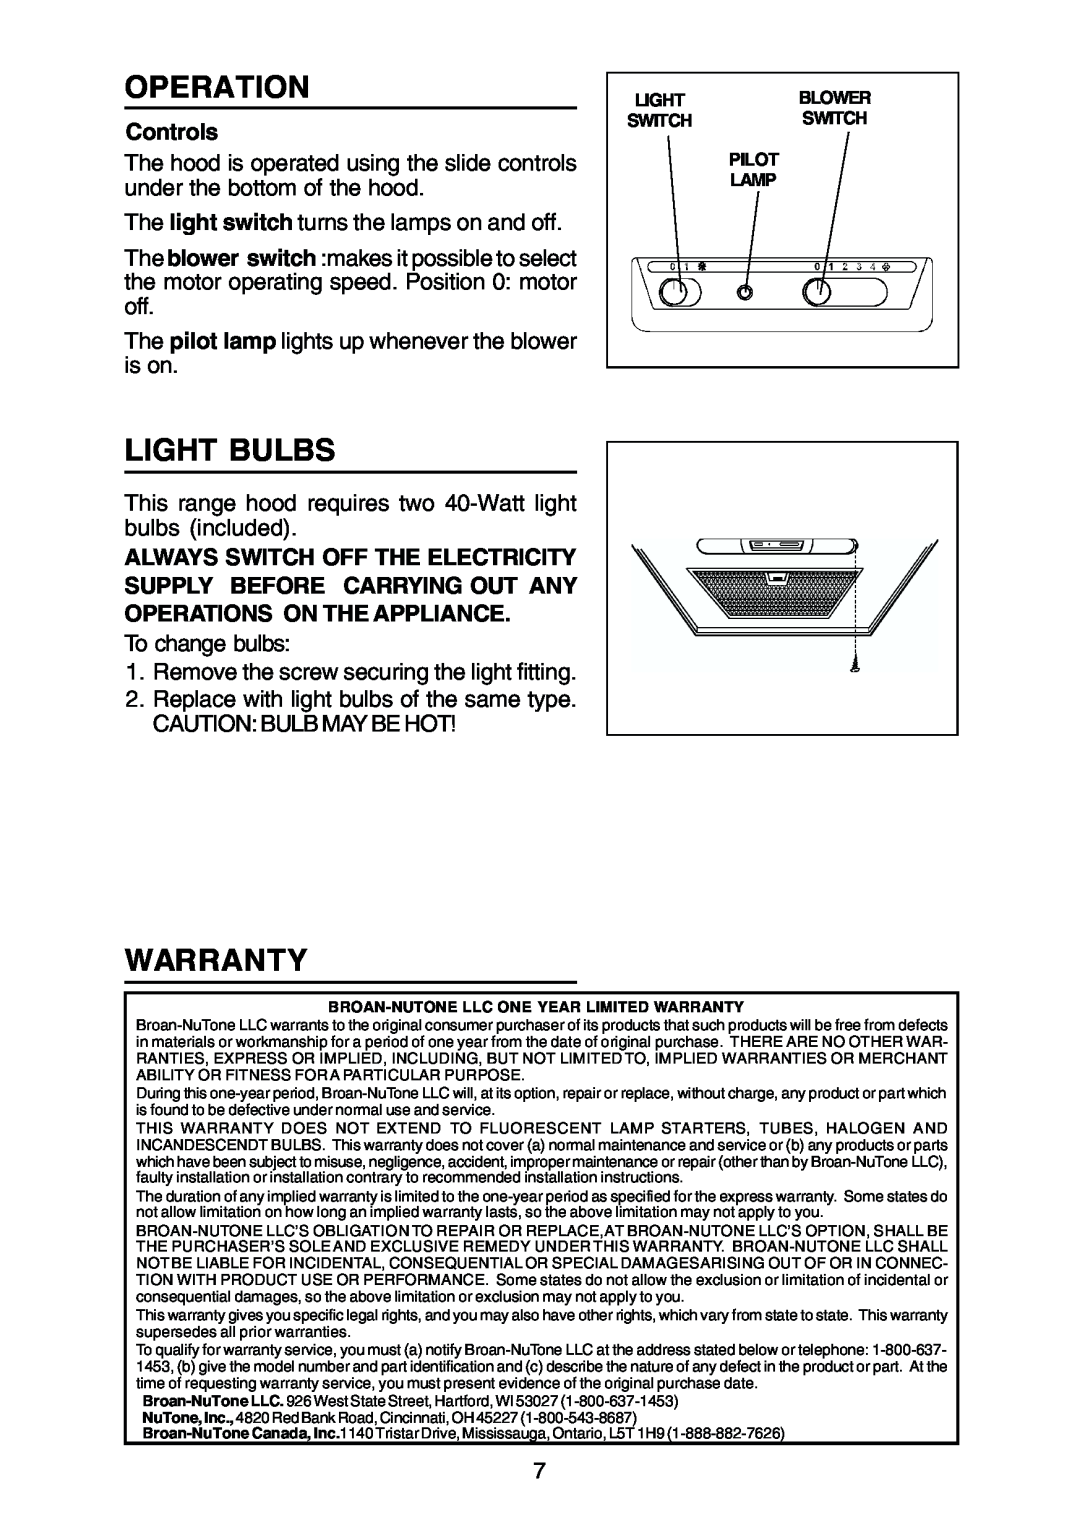 Rangemaster RM50000 Series manual Operation, Light Bulbs, Warranty, Controls, Lightblower Switchswitch Pilot Lamp 